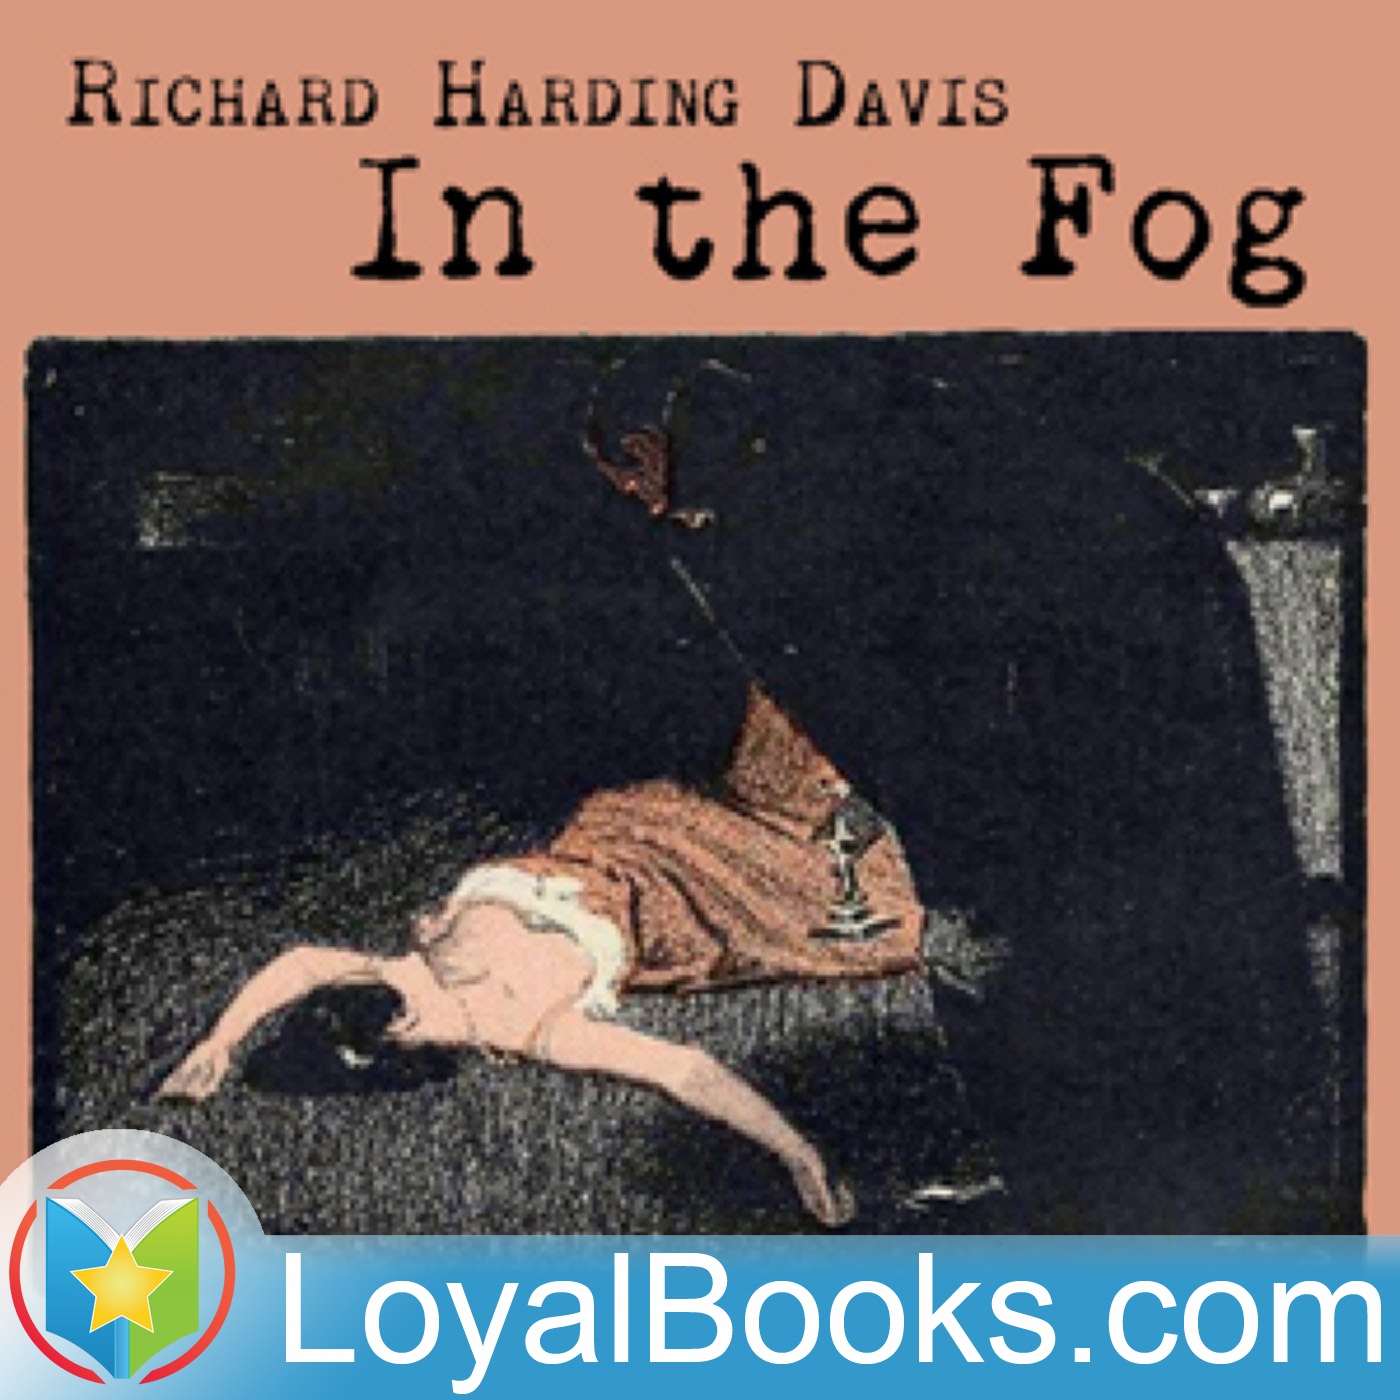 In the Fog by Richard Harding Davis